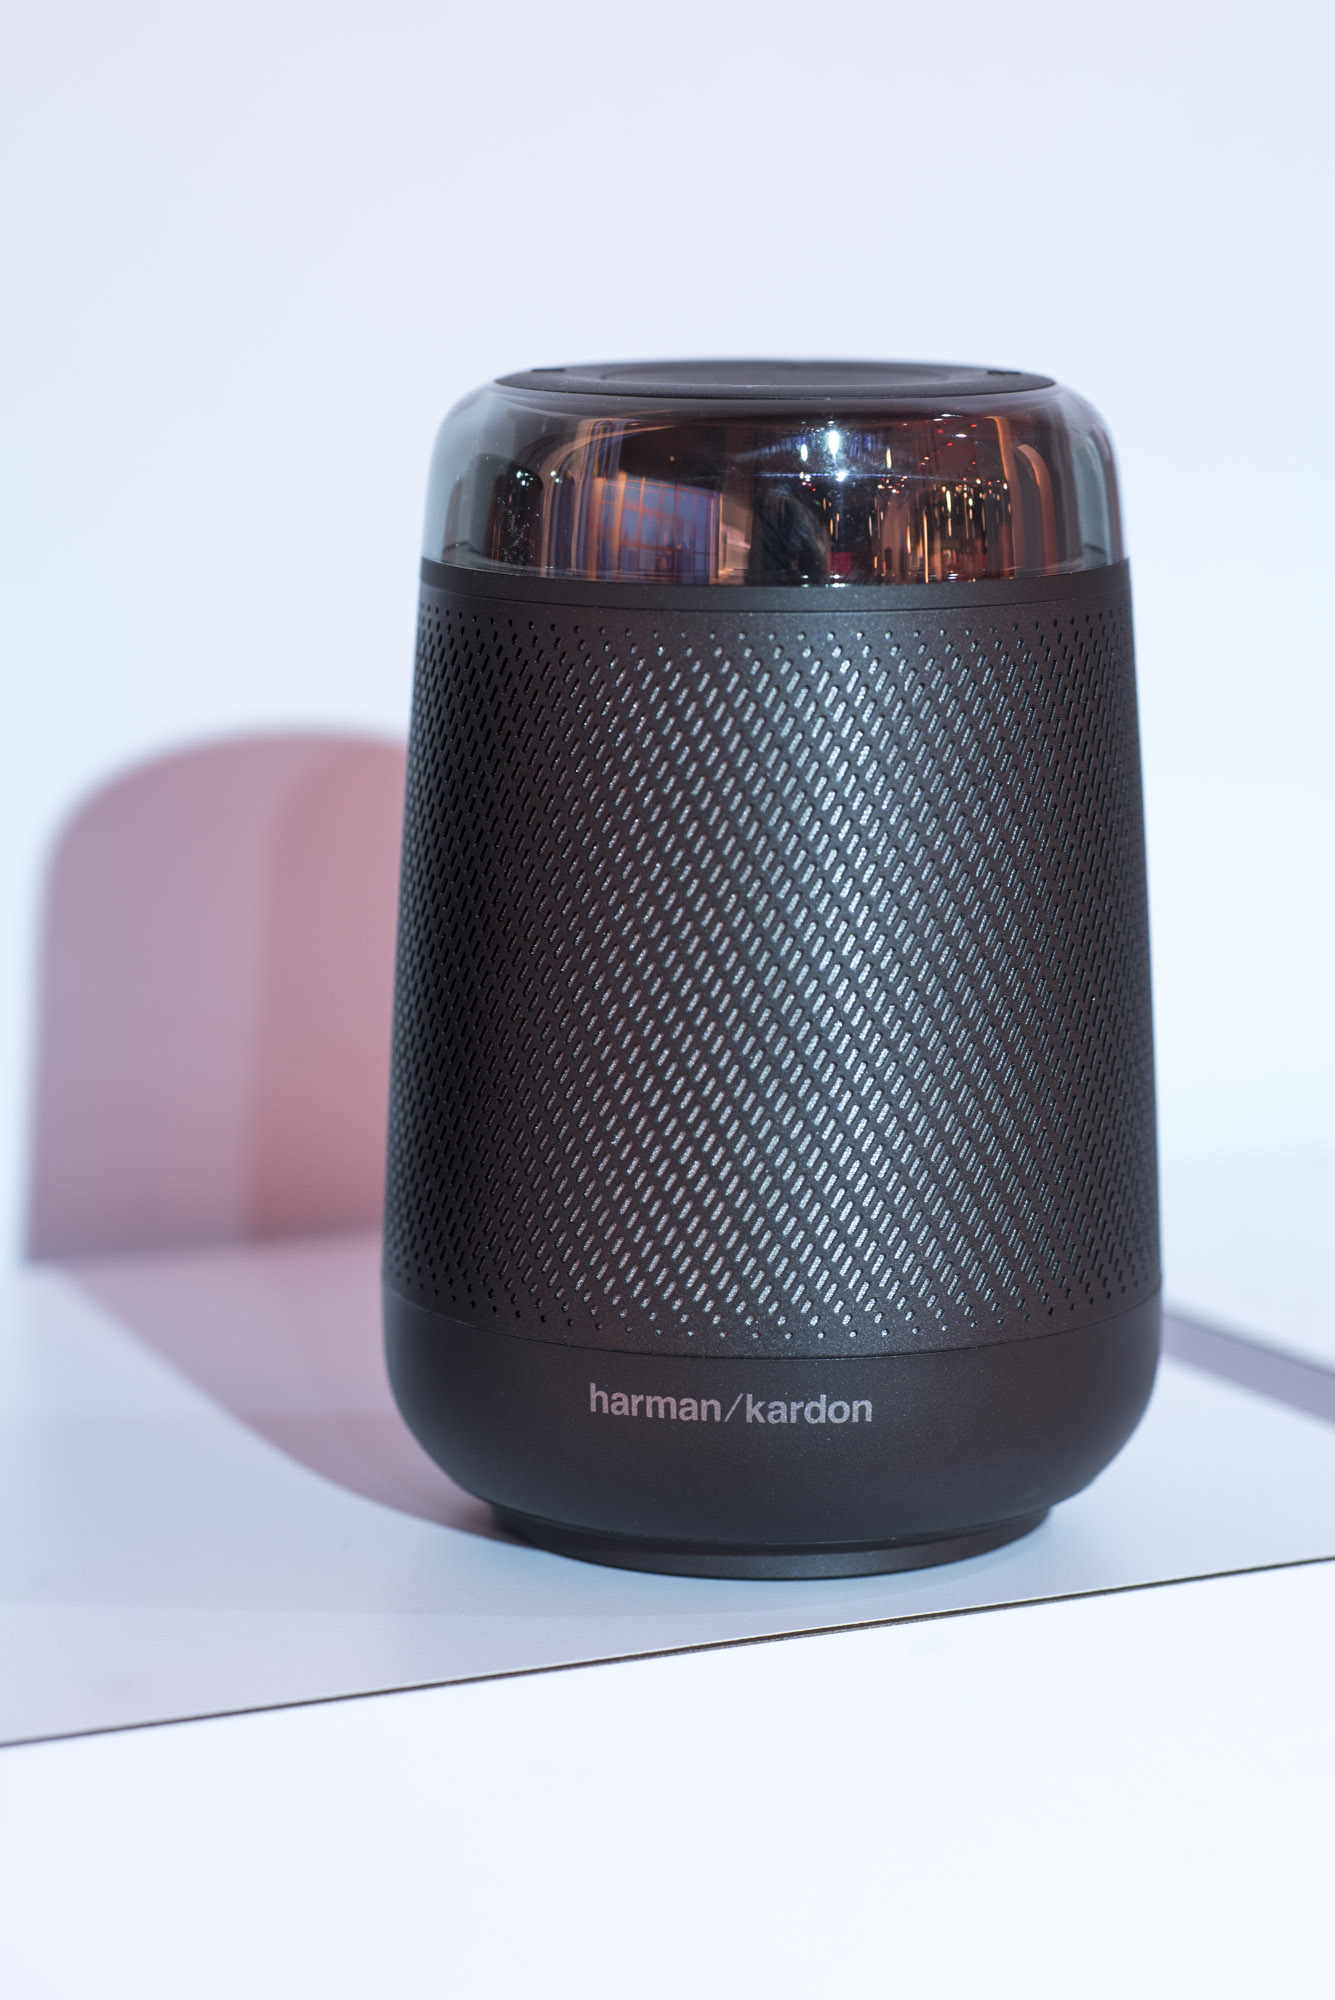 Harman Kardon Delivers Beautiful, Transportable Sound with Amazon